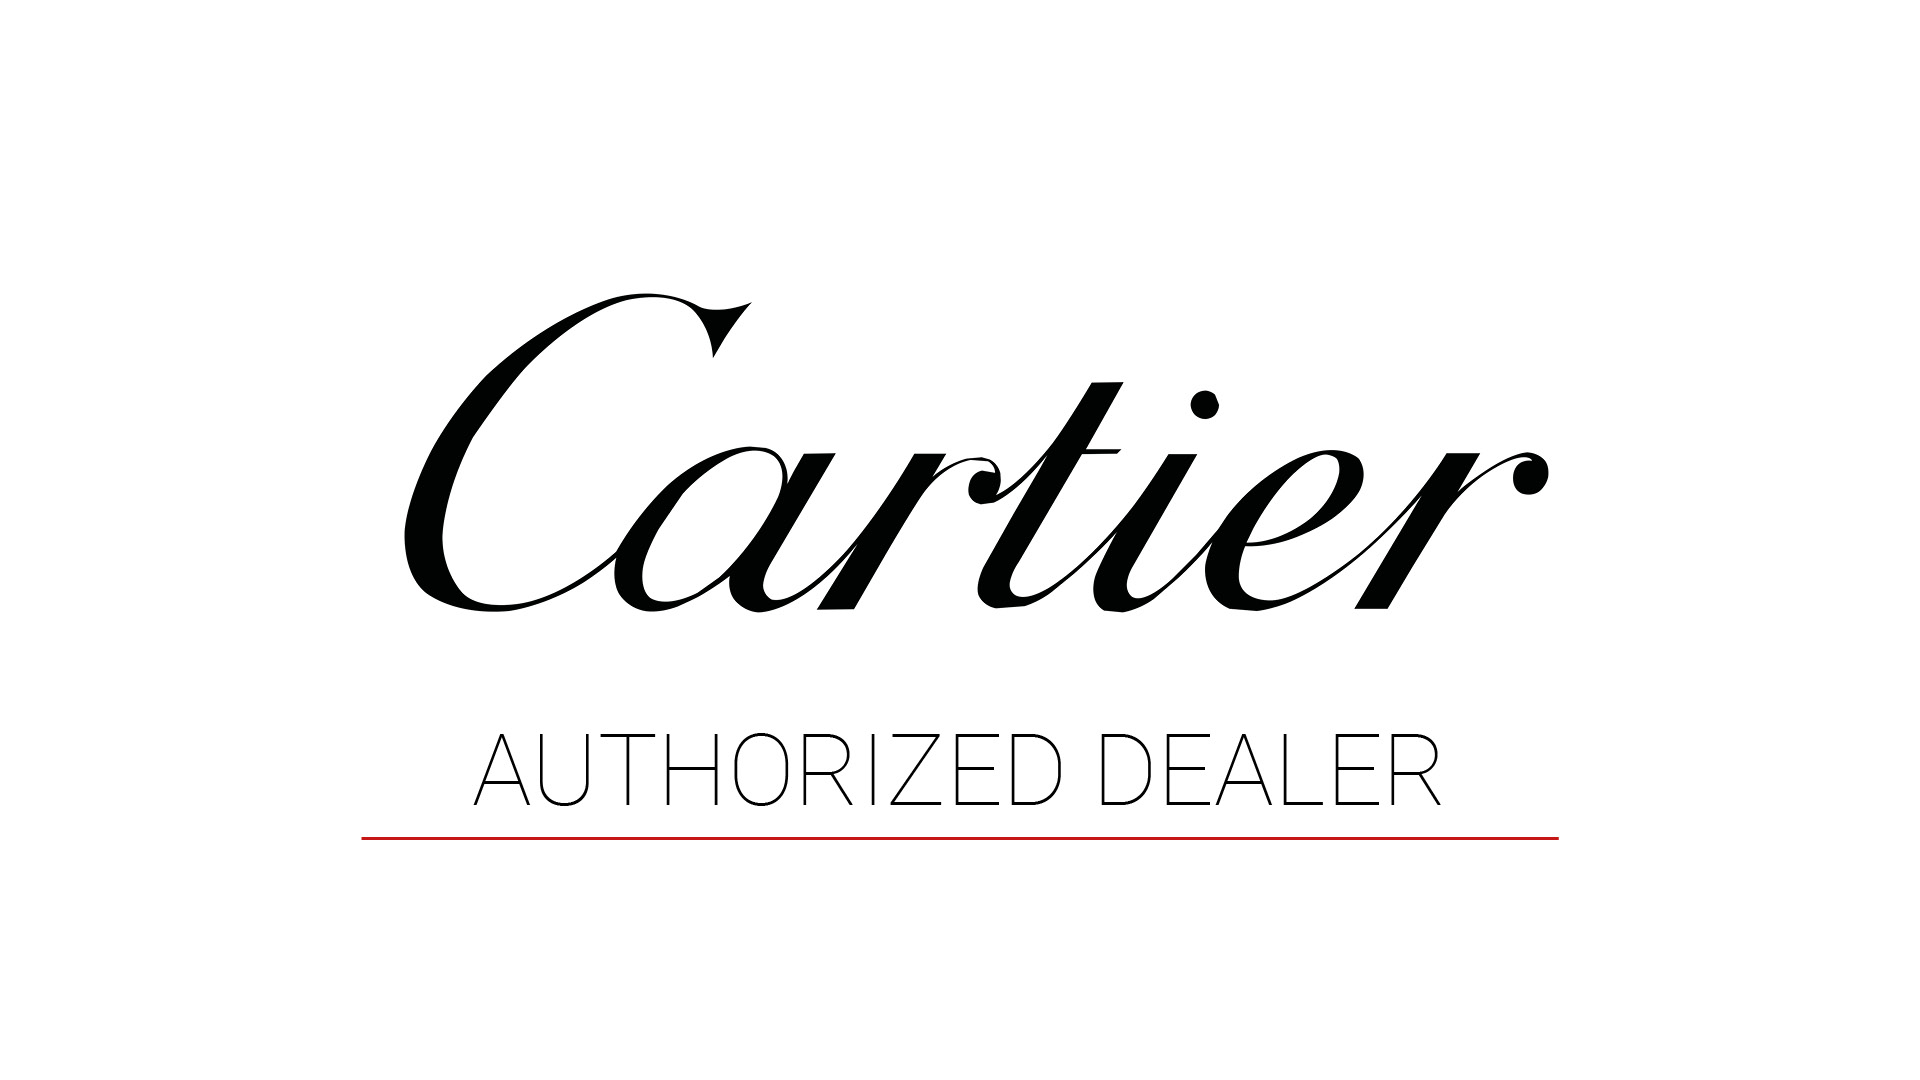 Authorized dealer in Rotterdam-Zuid. Cartier